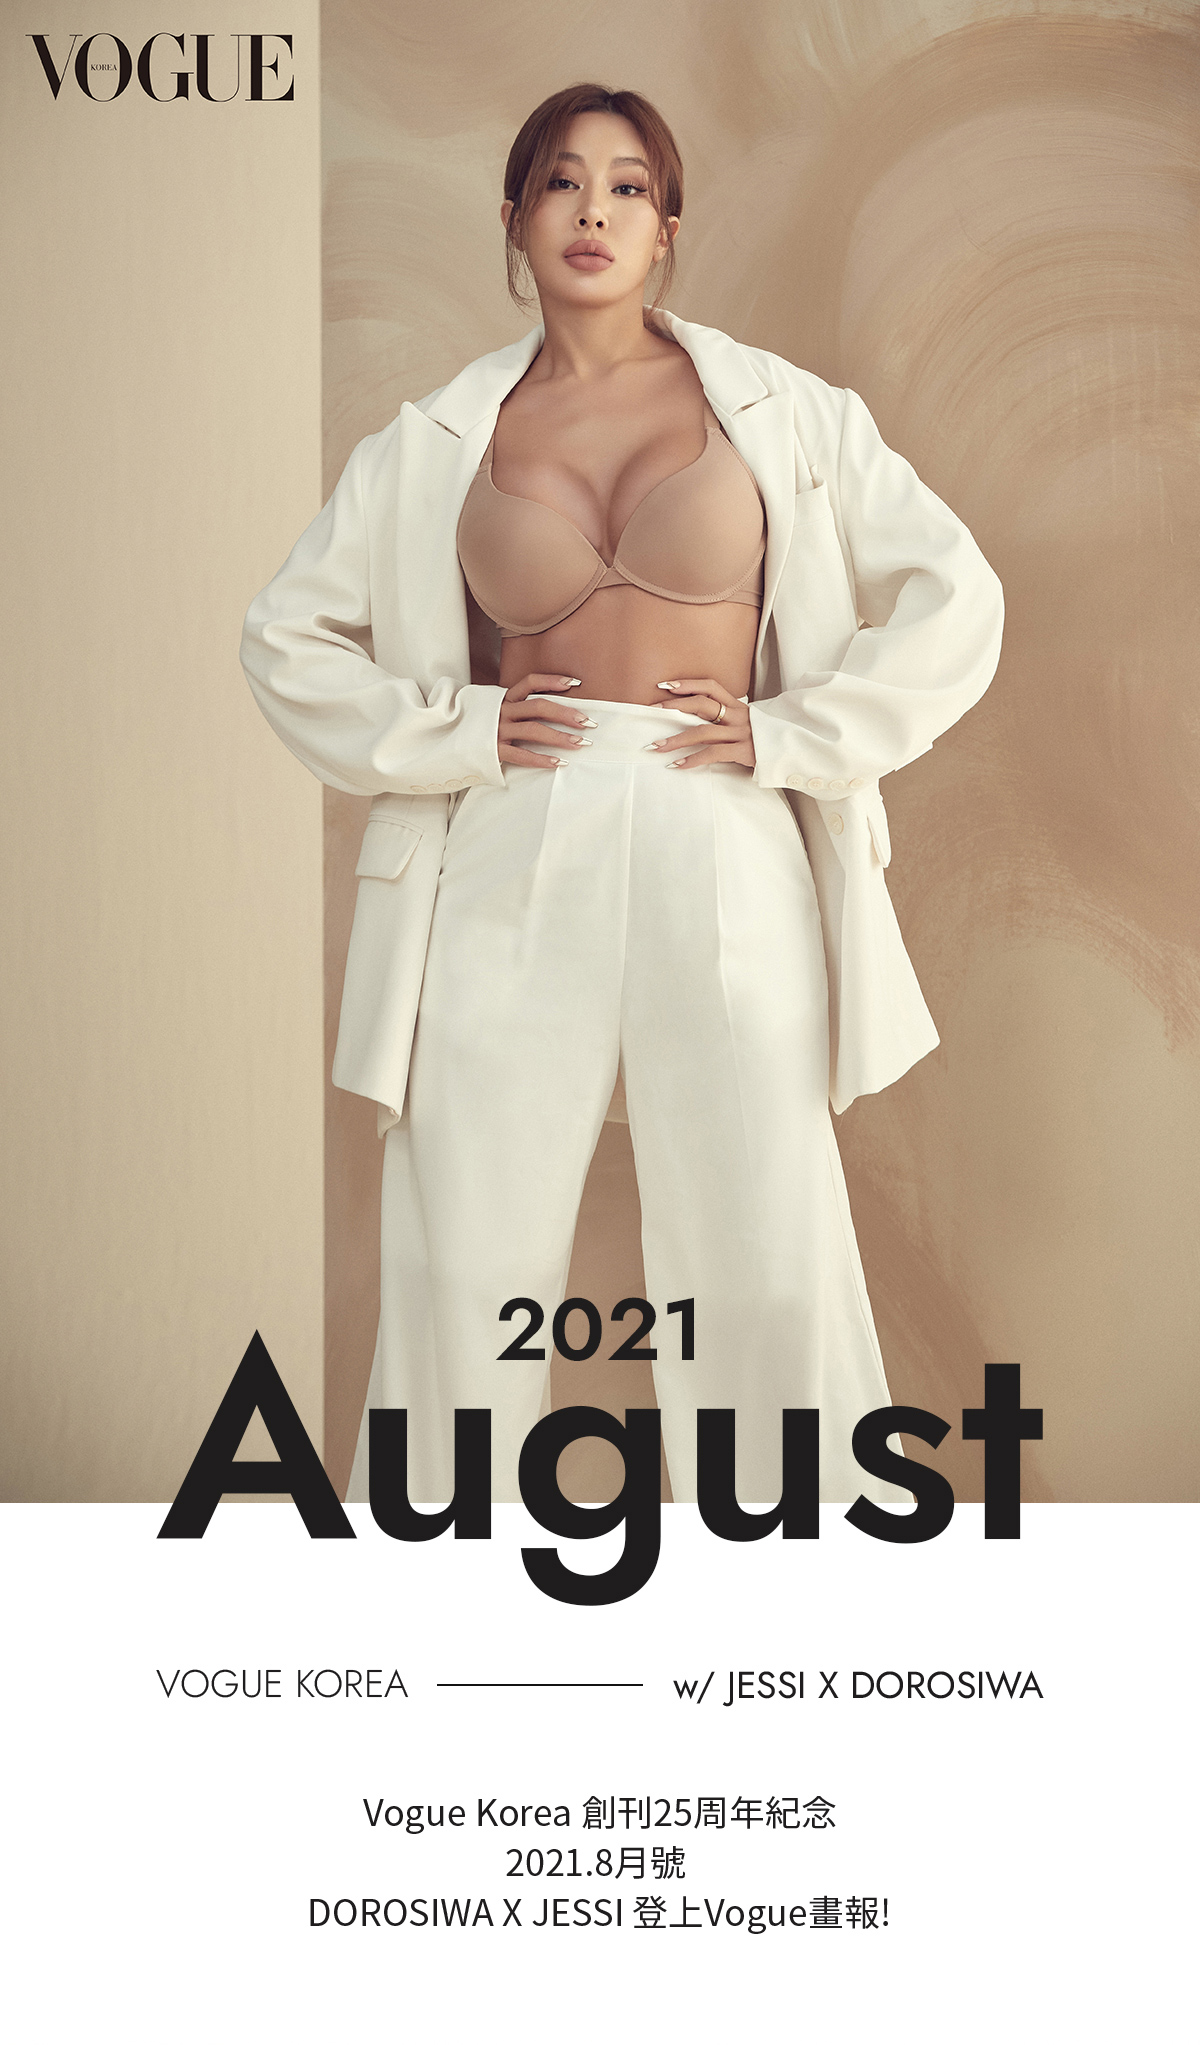 Vogue Korea 創刊25周年 DOROSIWA X JESSI 登上Vogue畫報 📷️ 2021年8月號